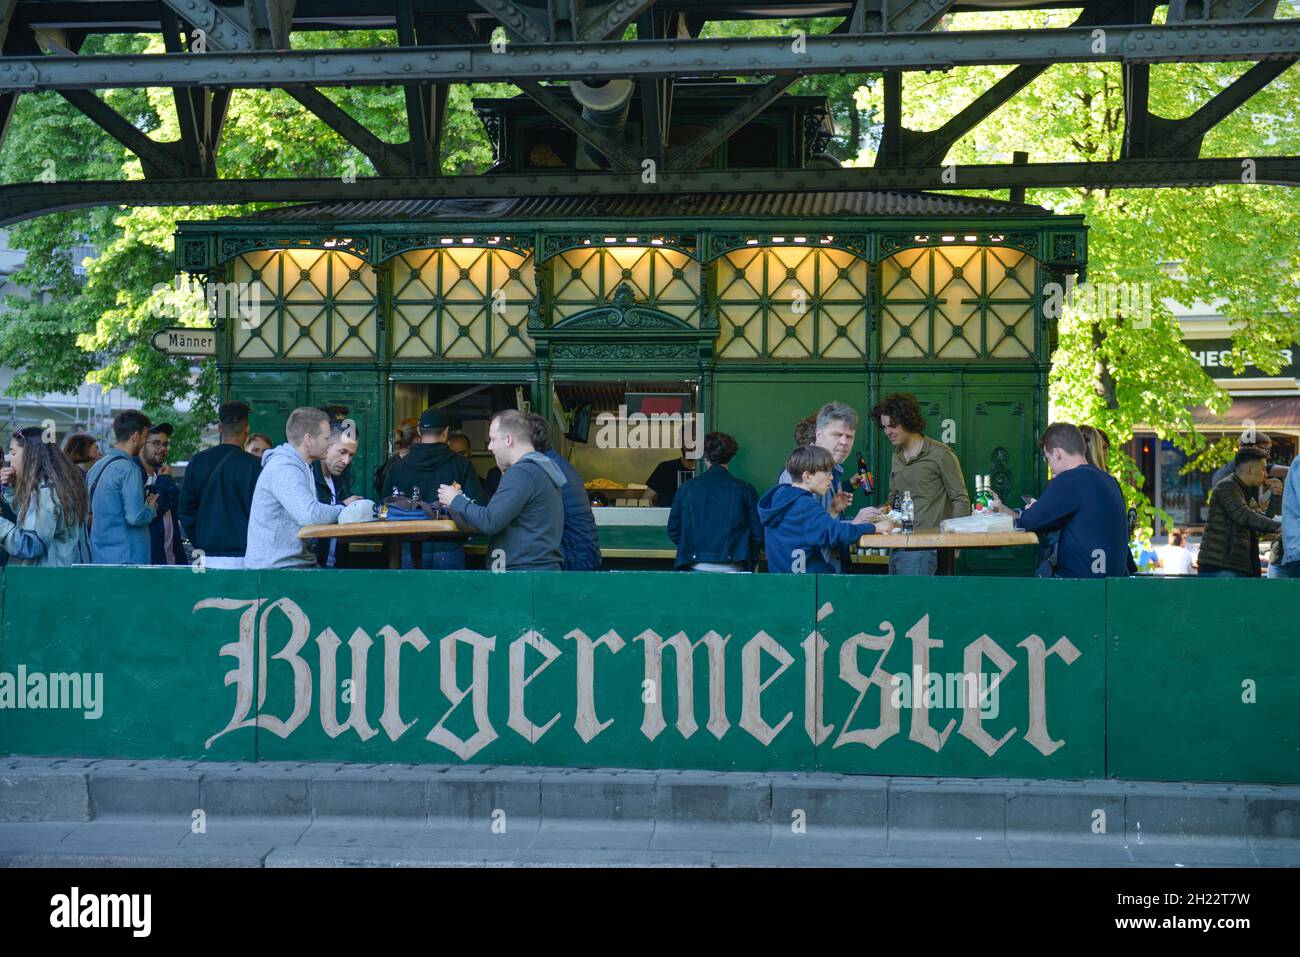 Burgermeister, Schlesisches Tor, Kreuzberg, Berlin, Allemagne Banque D'Images